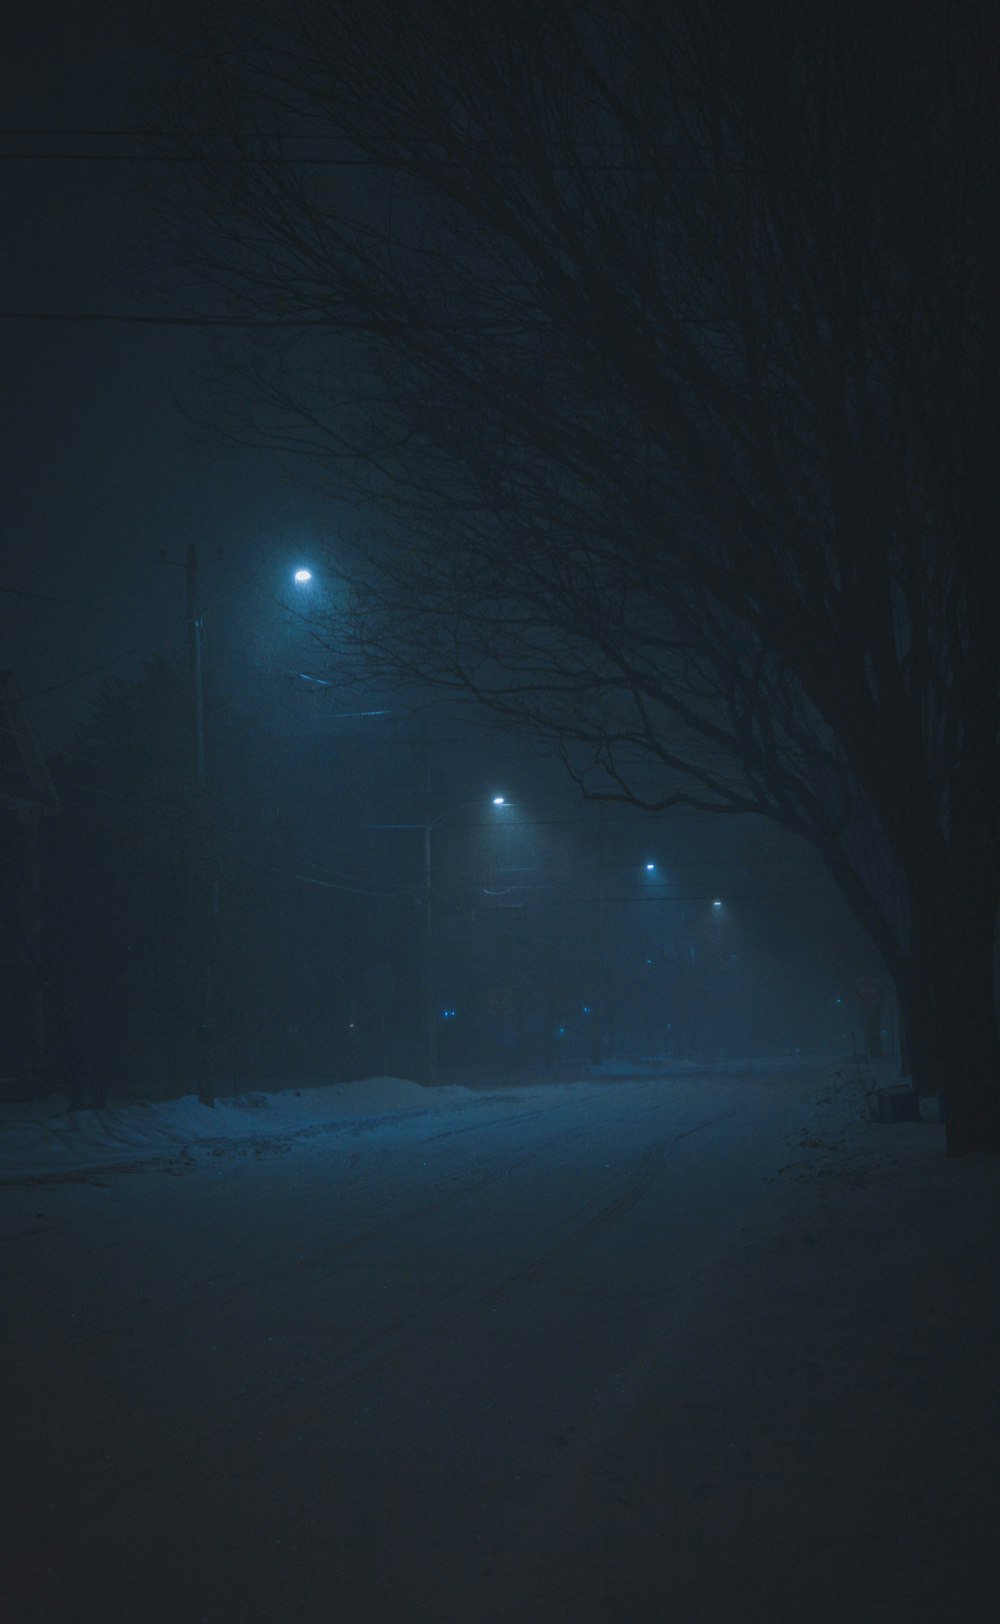 a dark street at night with street lights